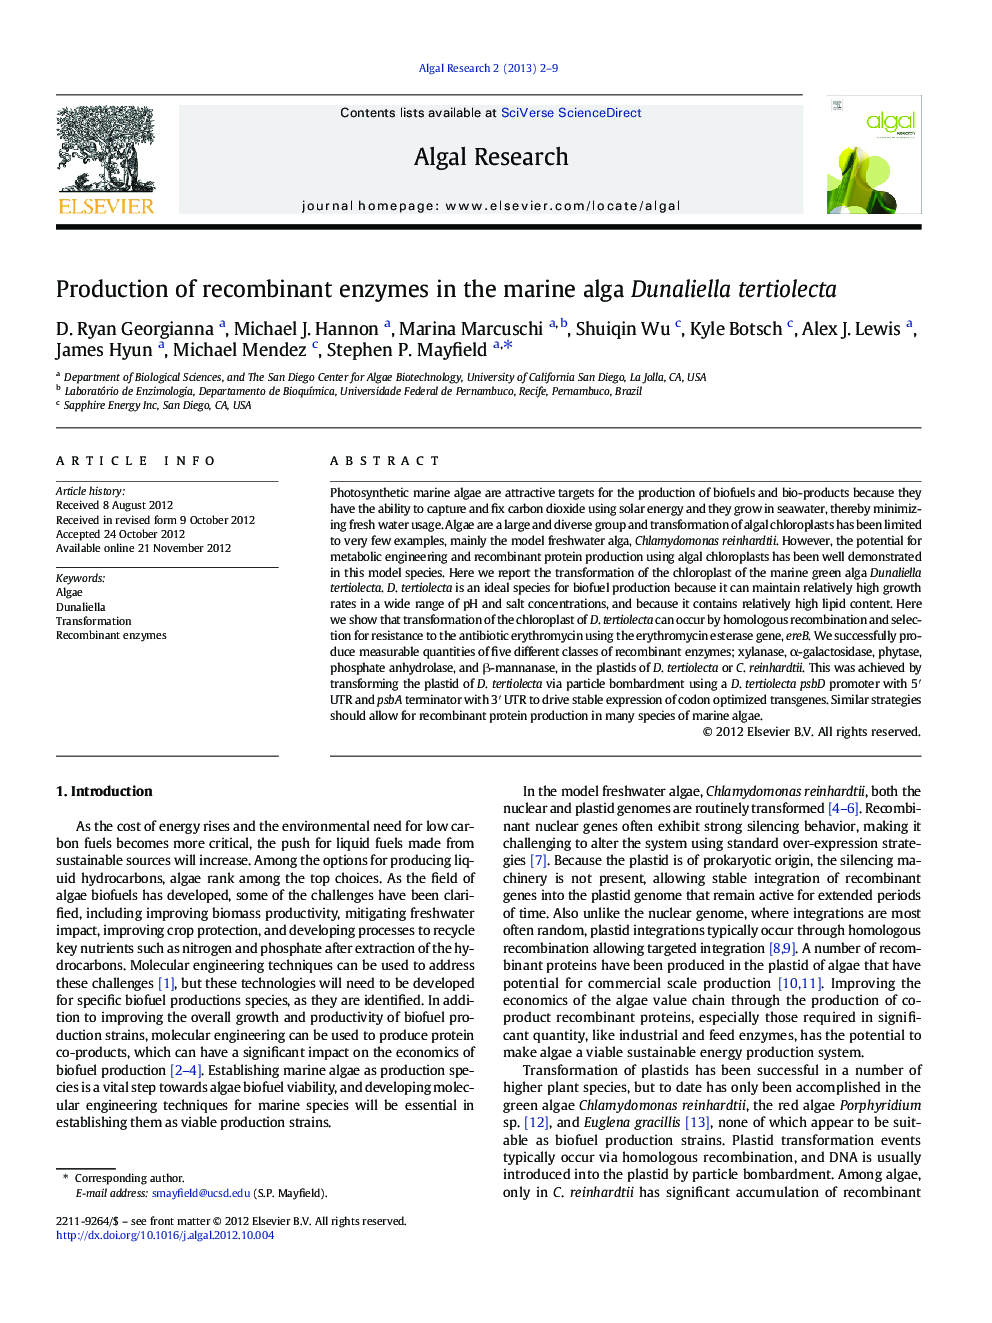 Production of recombinant enzymes in the marine alga Dunaliella tertiolecta